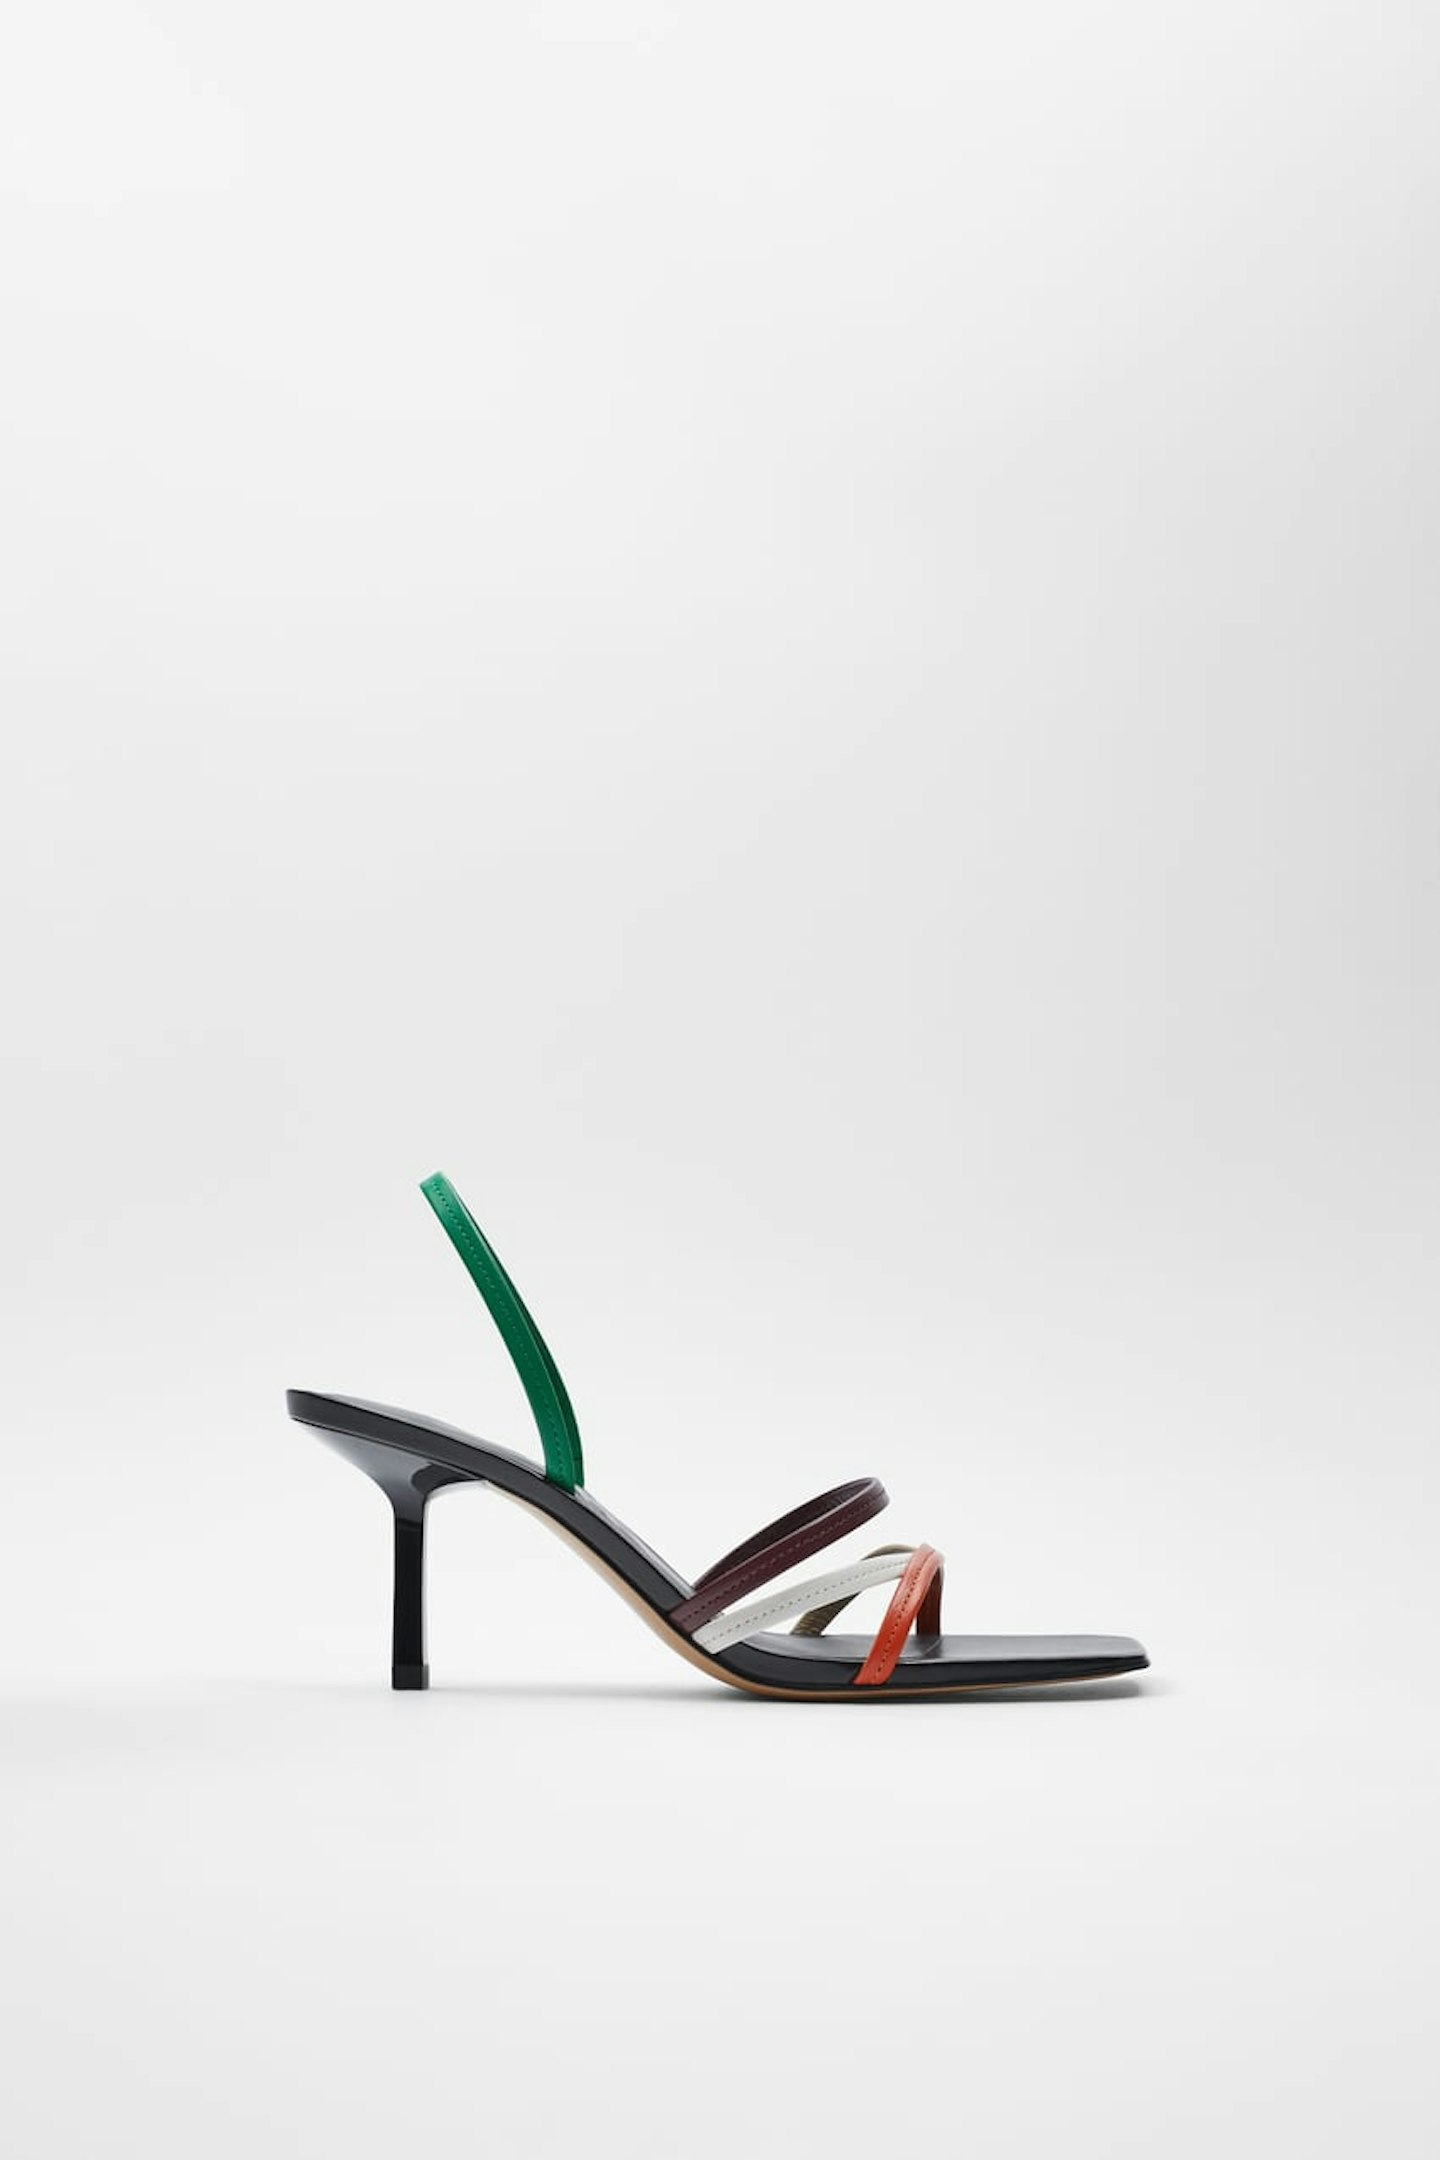 Zara, Strappy Sandals, £49.99